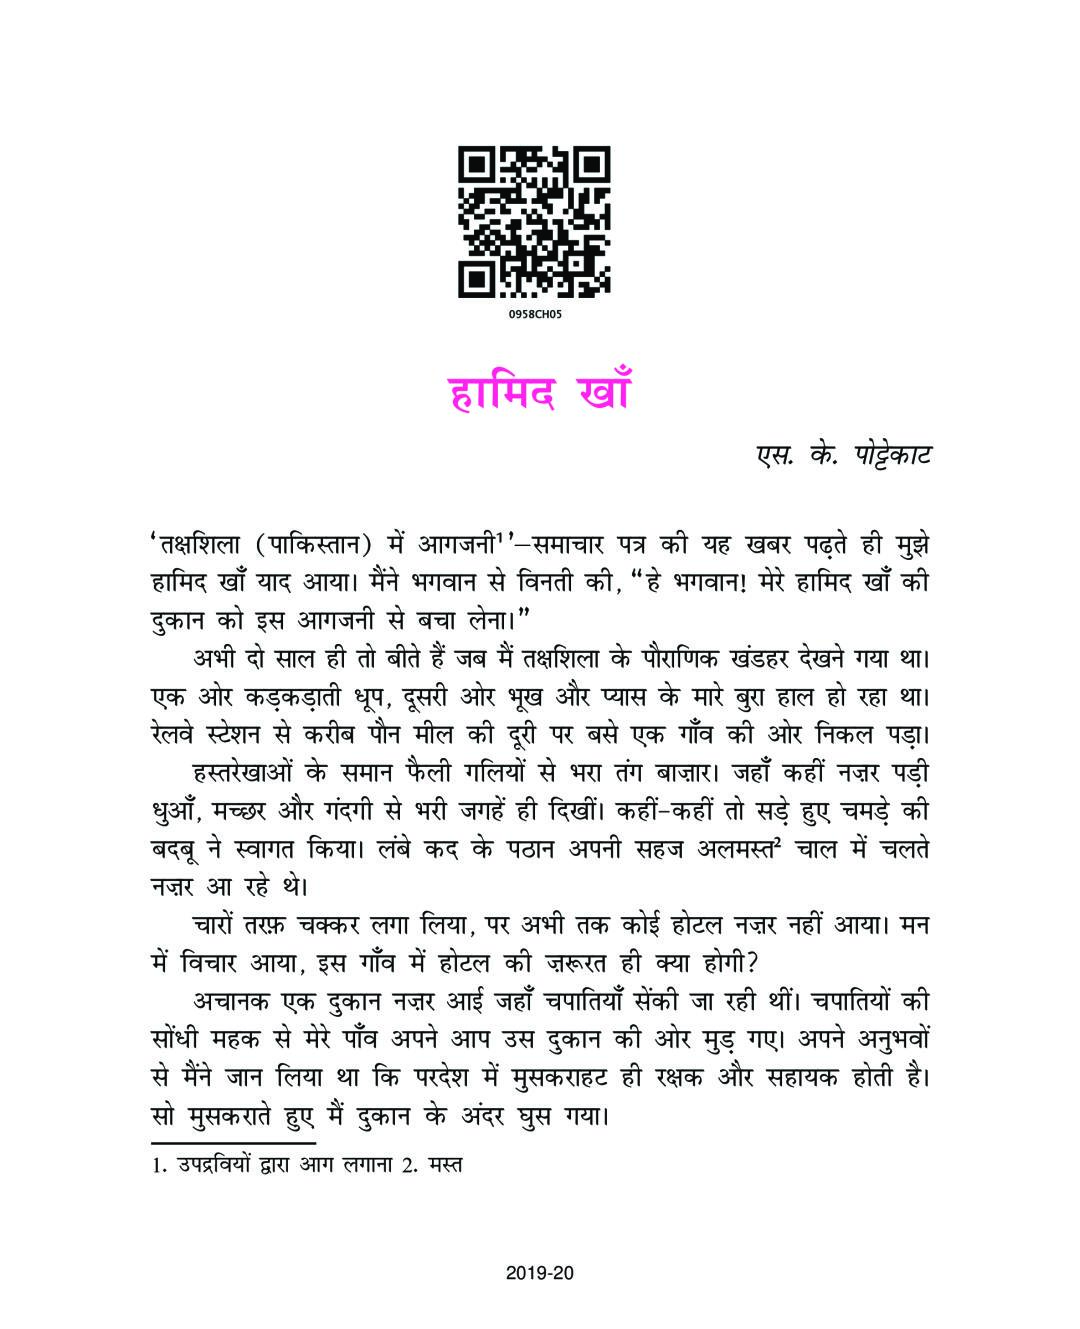 NCERT Book Class 9 Hindi (संचयन) Chapter 5 हामिद खां - Page 1